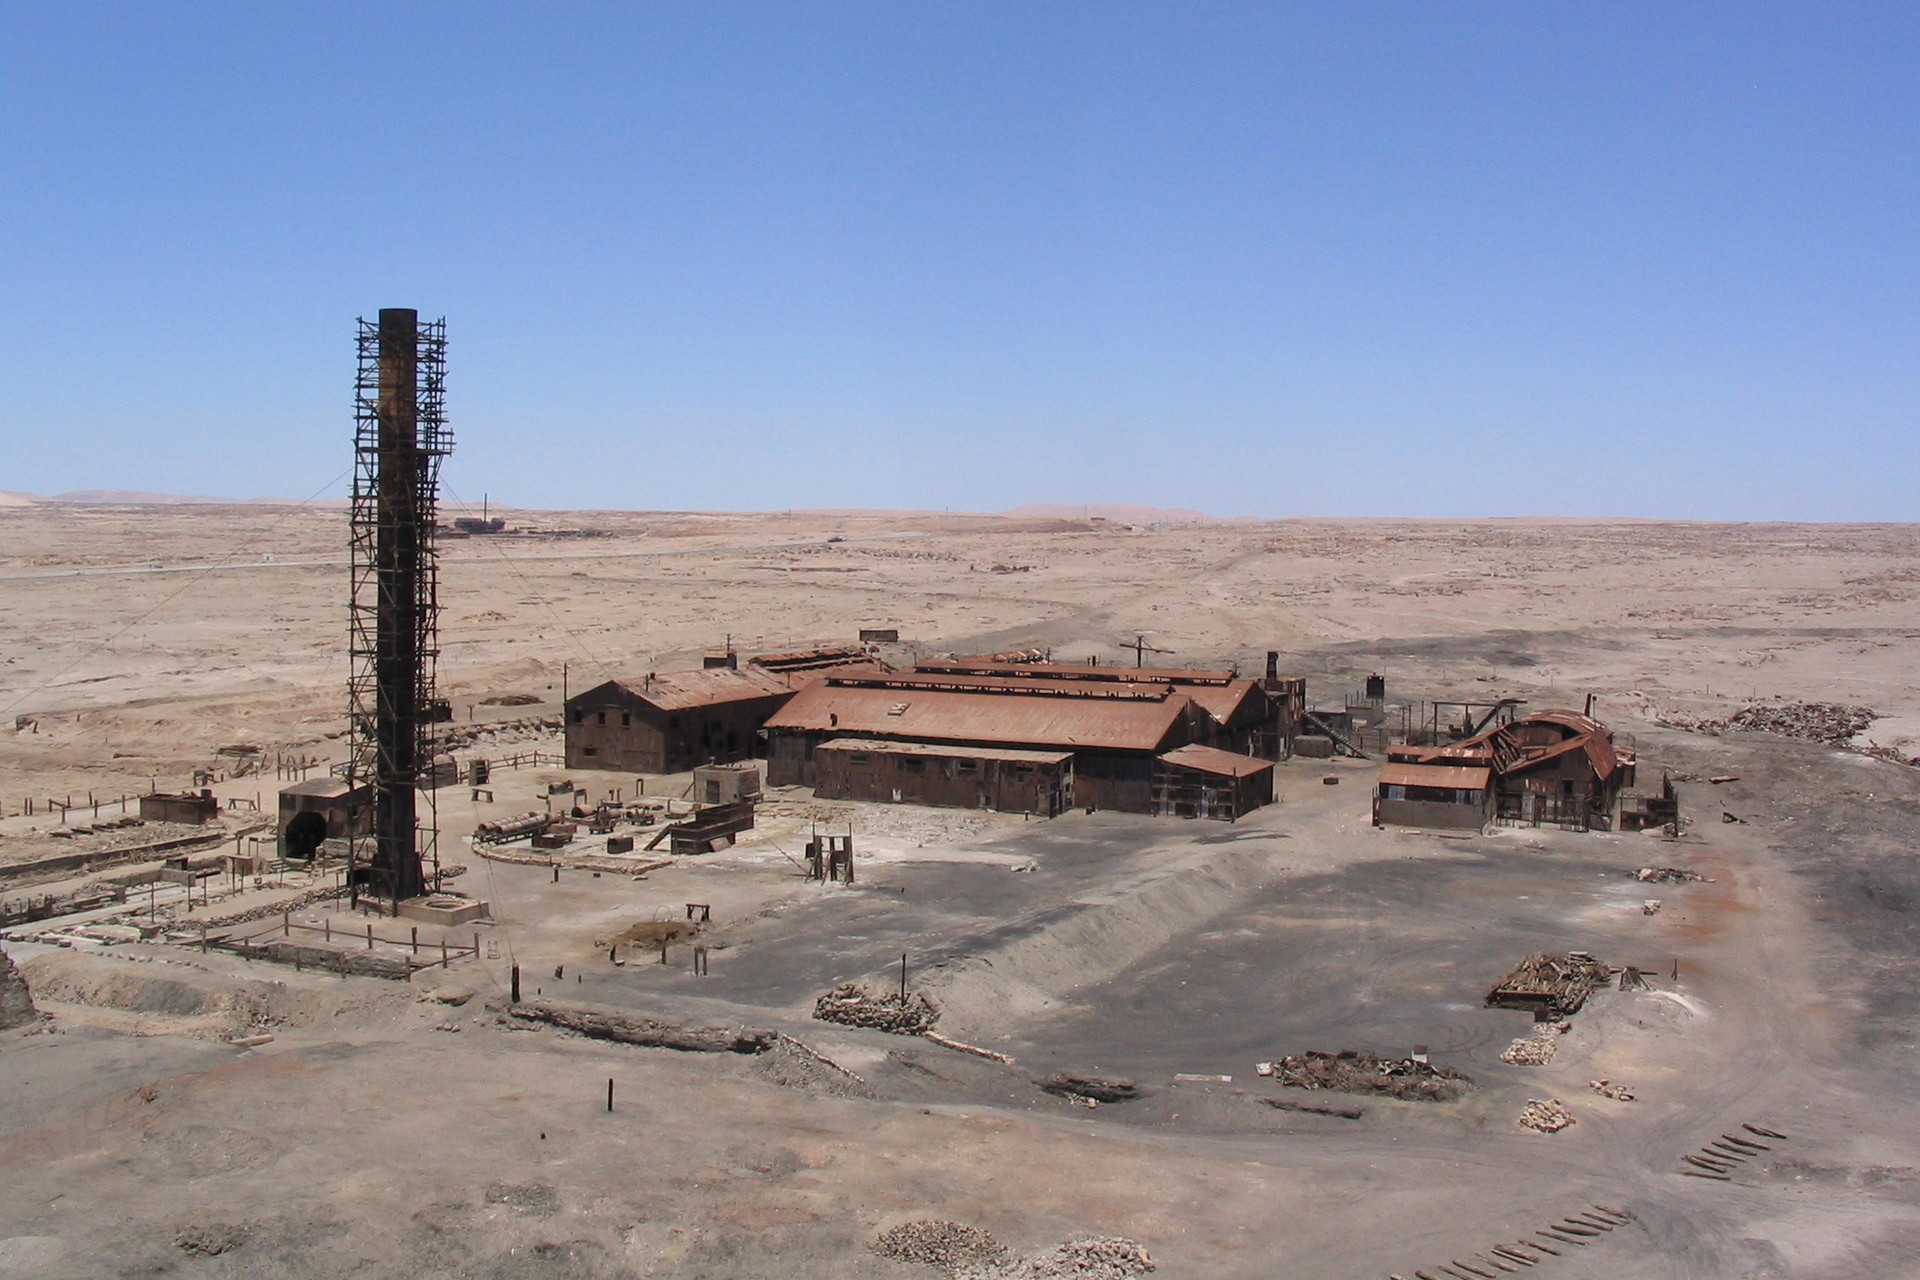 Humberstone, opuszczona fabryka saletry w Chile